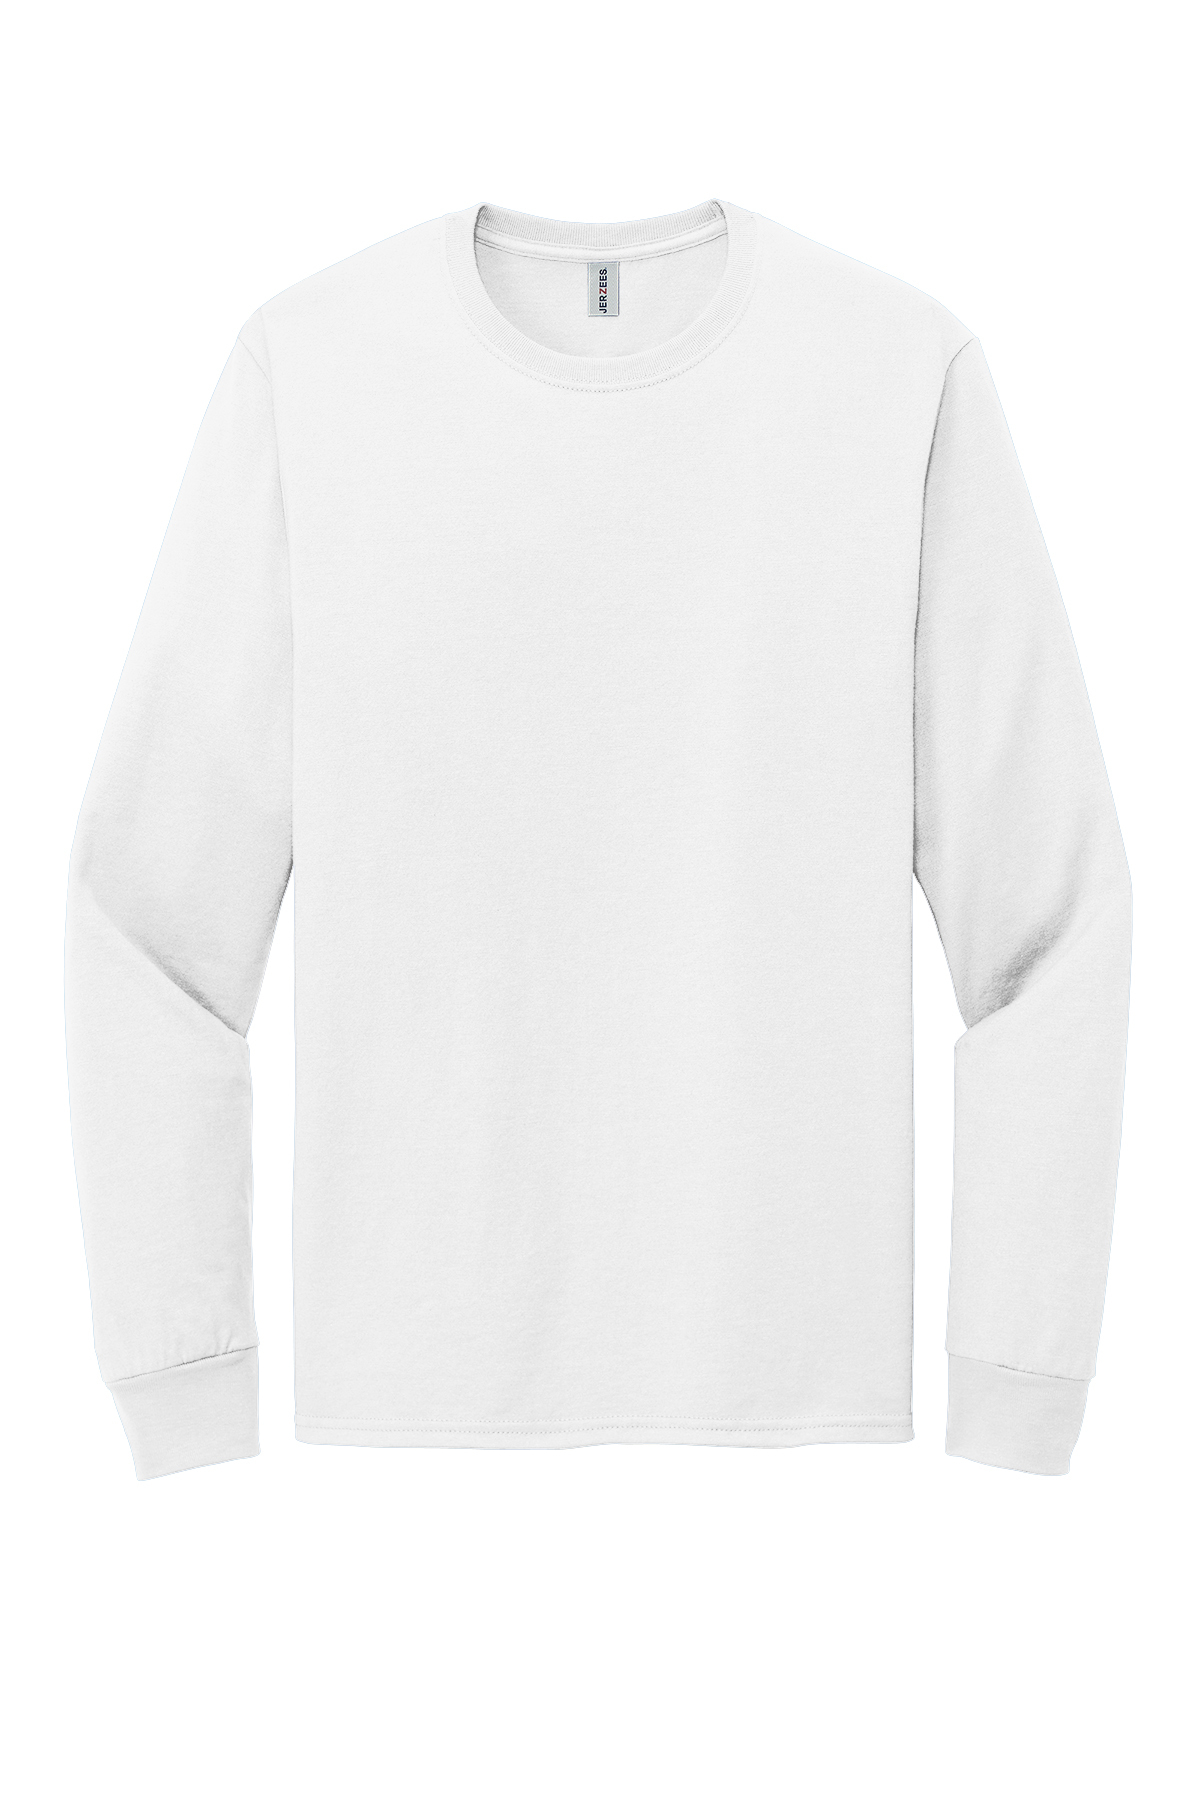 Jerzees Premium Blend Ring Spun Long Sleeve T-Shirt | Product | Online ...